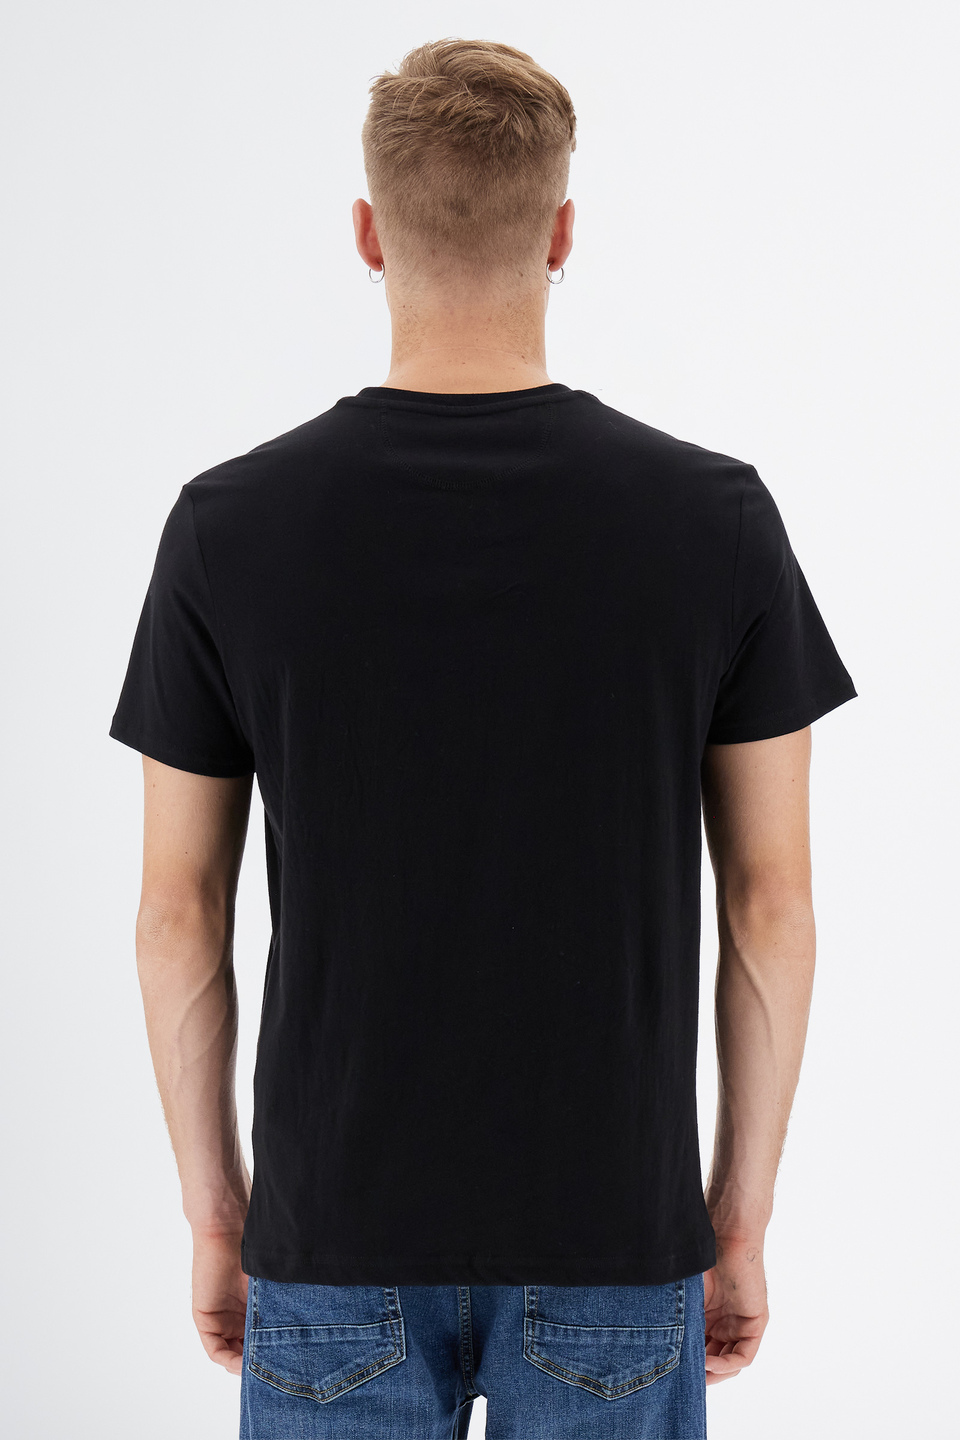 Kurzarm-T-Shirt aus 100% Baumwolle mit Rundhalsausschnitt | La Martina - Official Online Shop